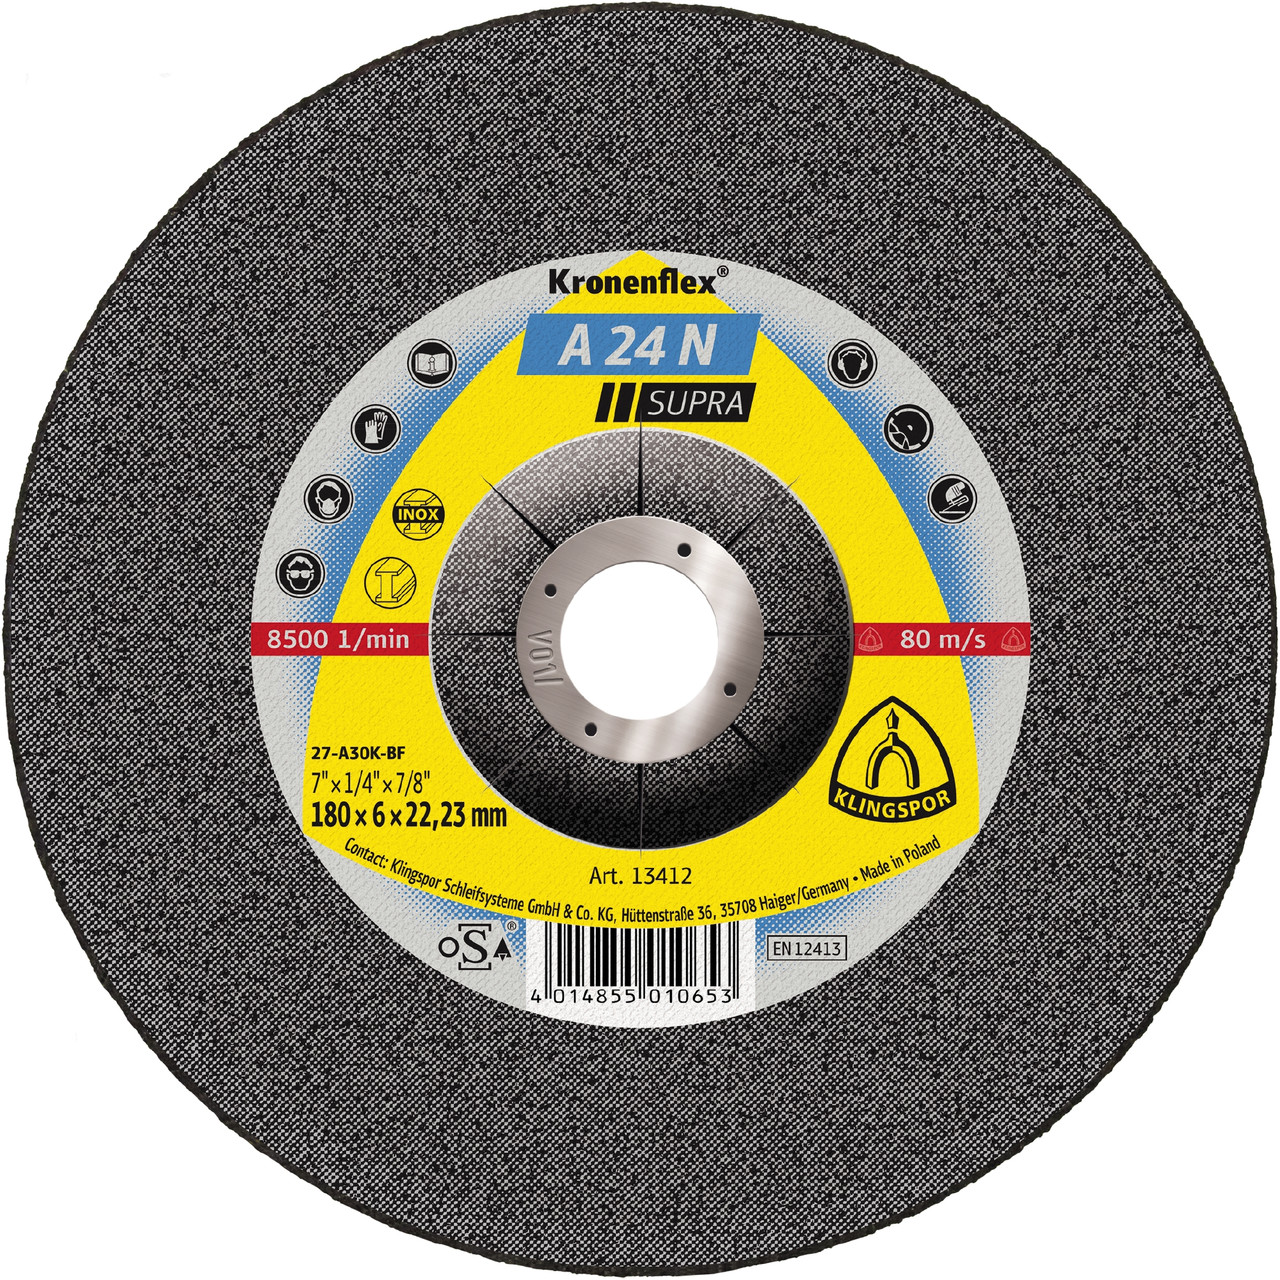 Grinding Disc - (A24N) Supra/8500Rpm/Inox Soft 180X6X22Mm